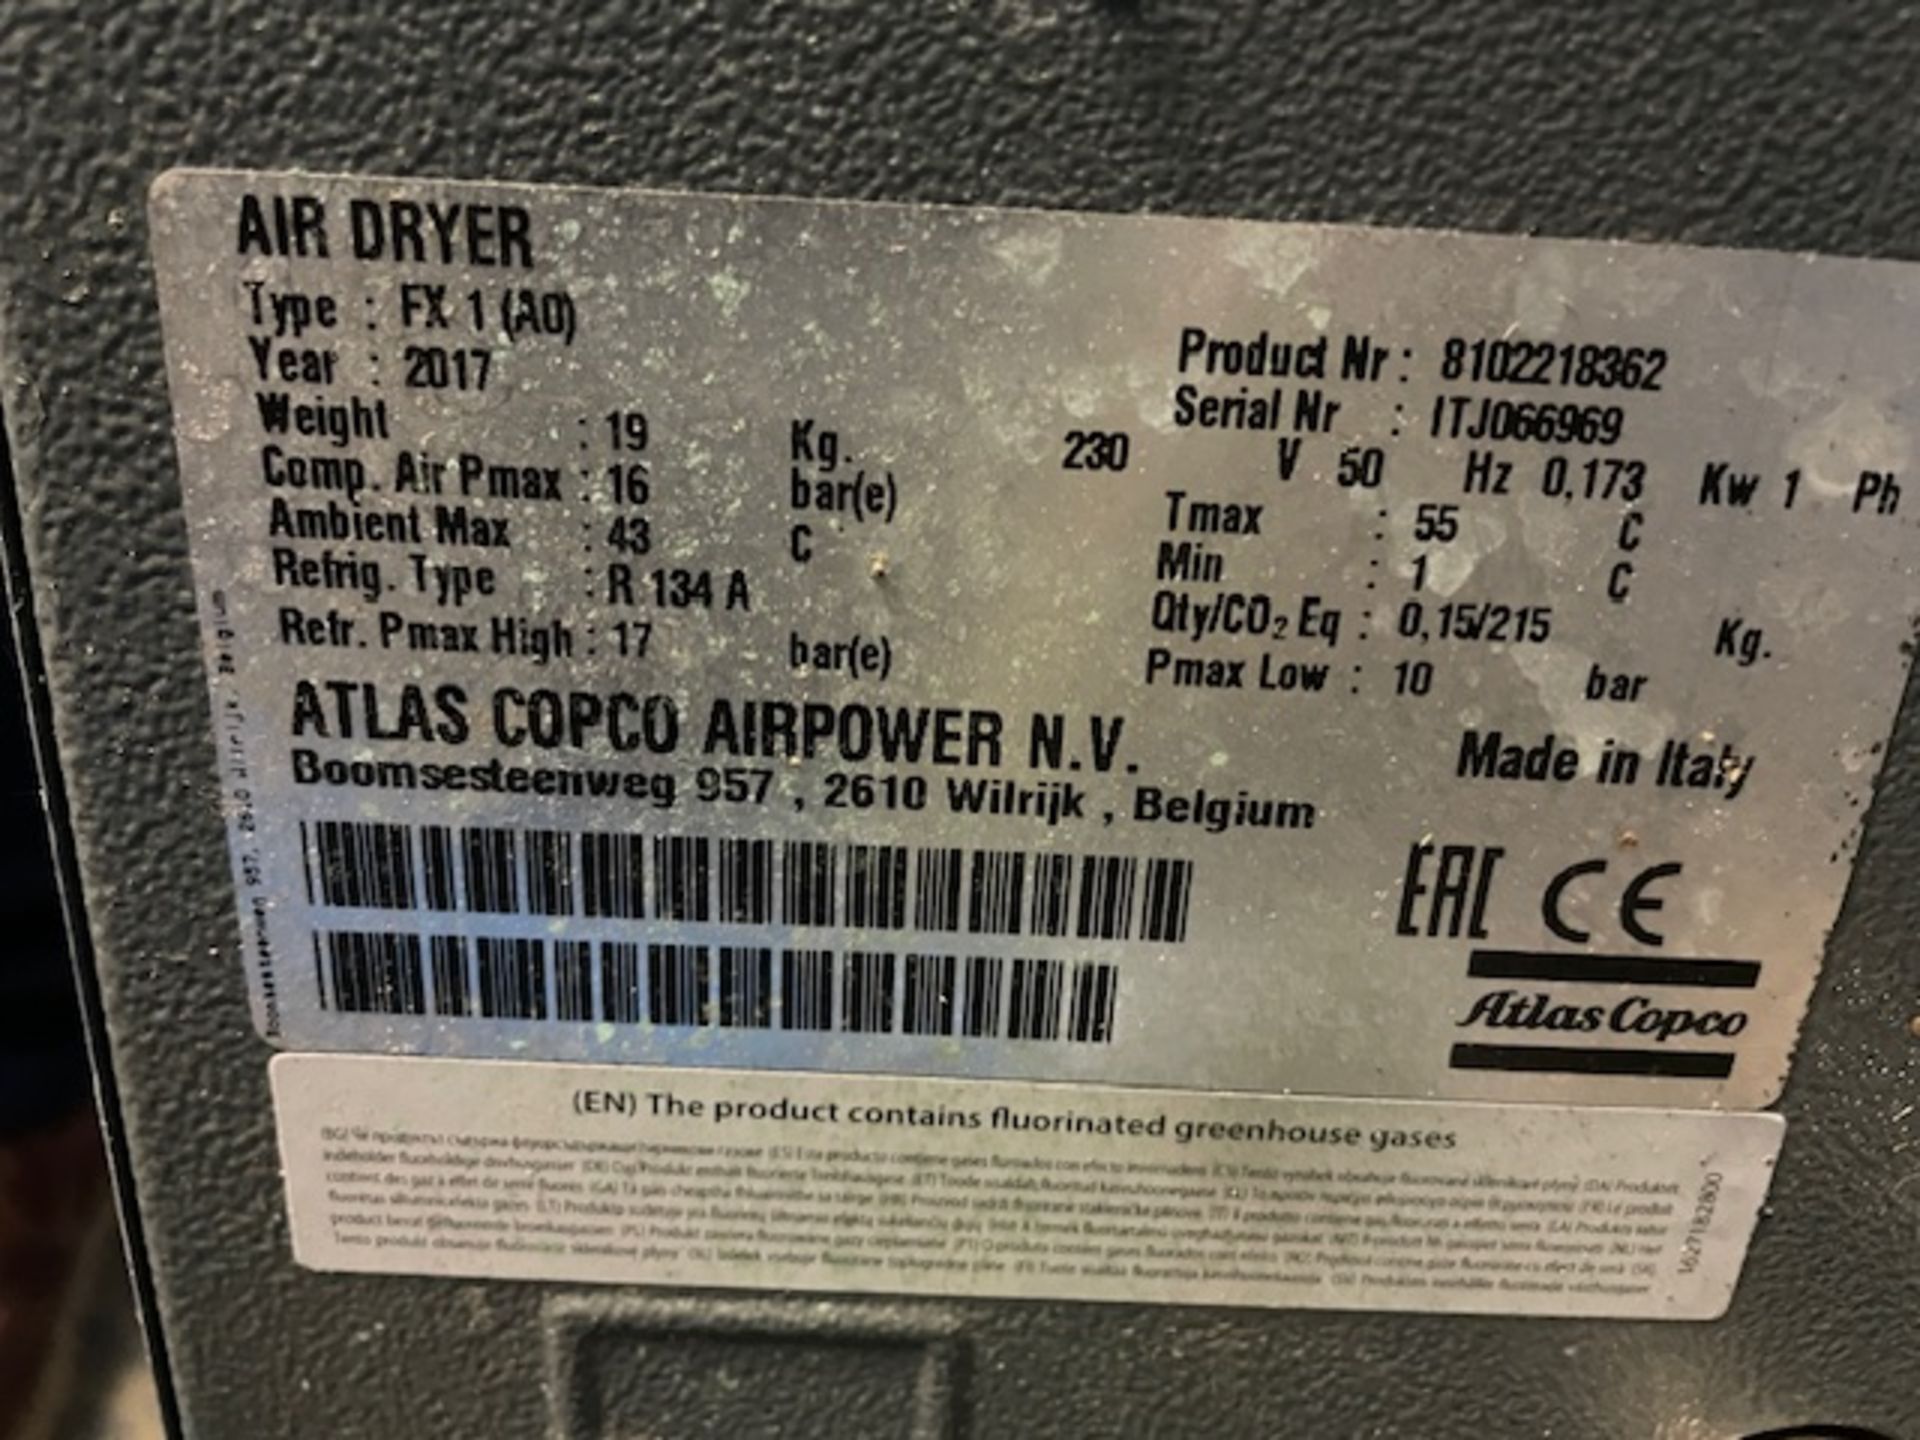 Atlas Copco FX1 Air Dryer (2017), Serial Number ITJ066969 - Image 2 of 2